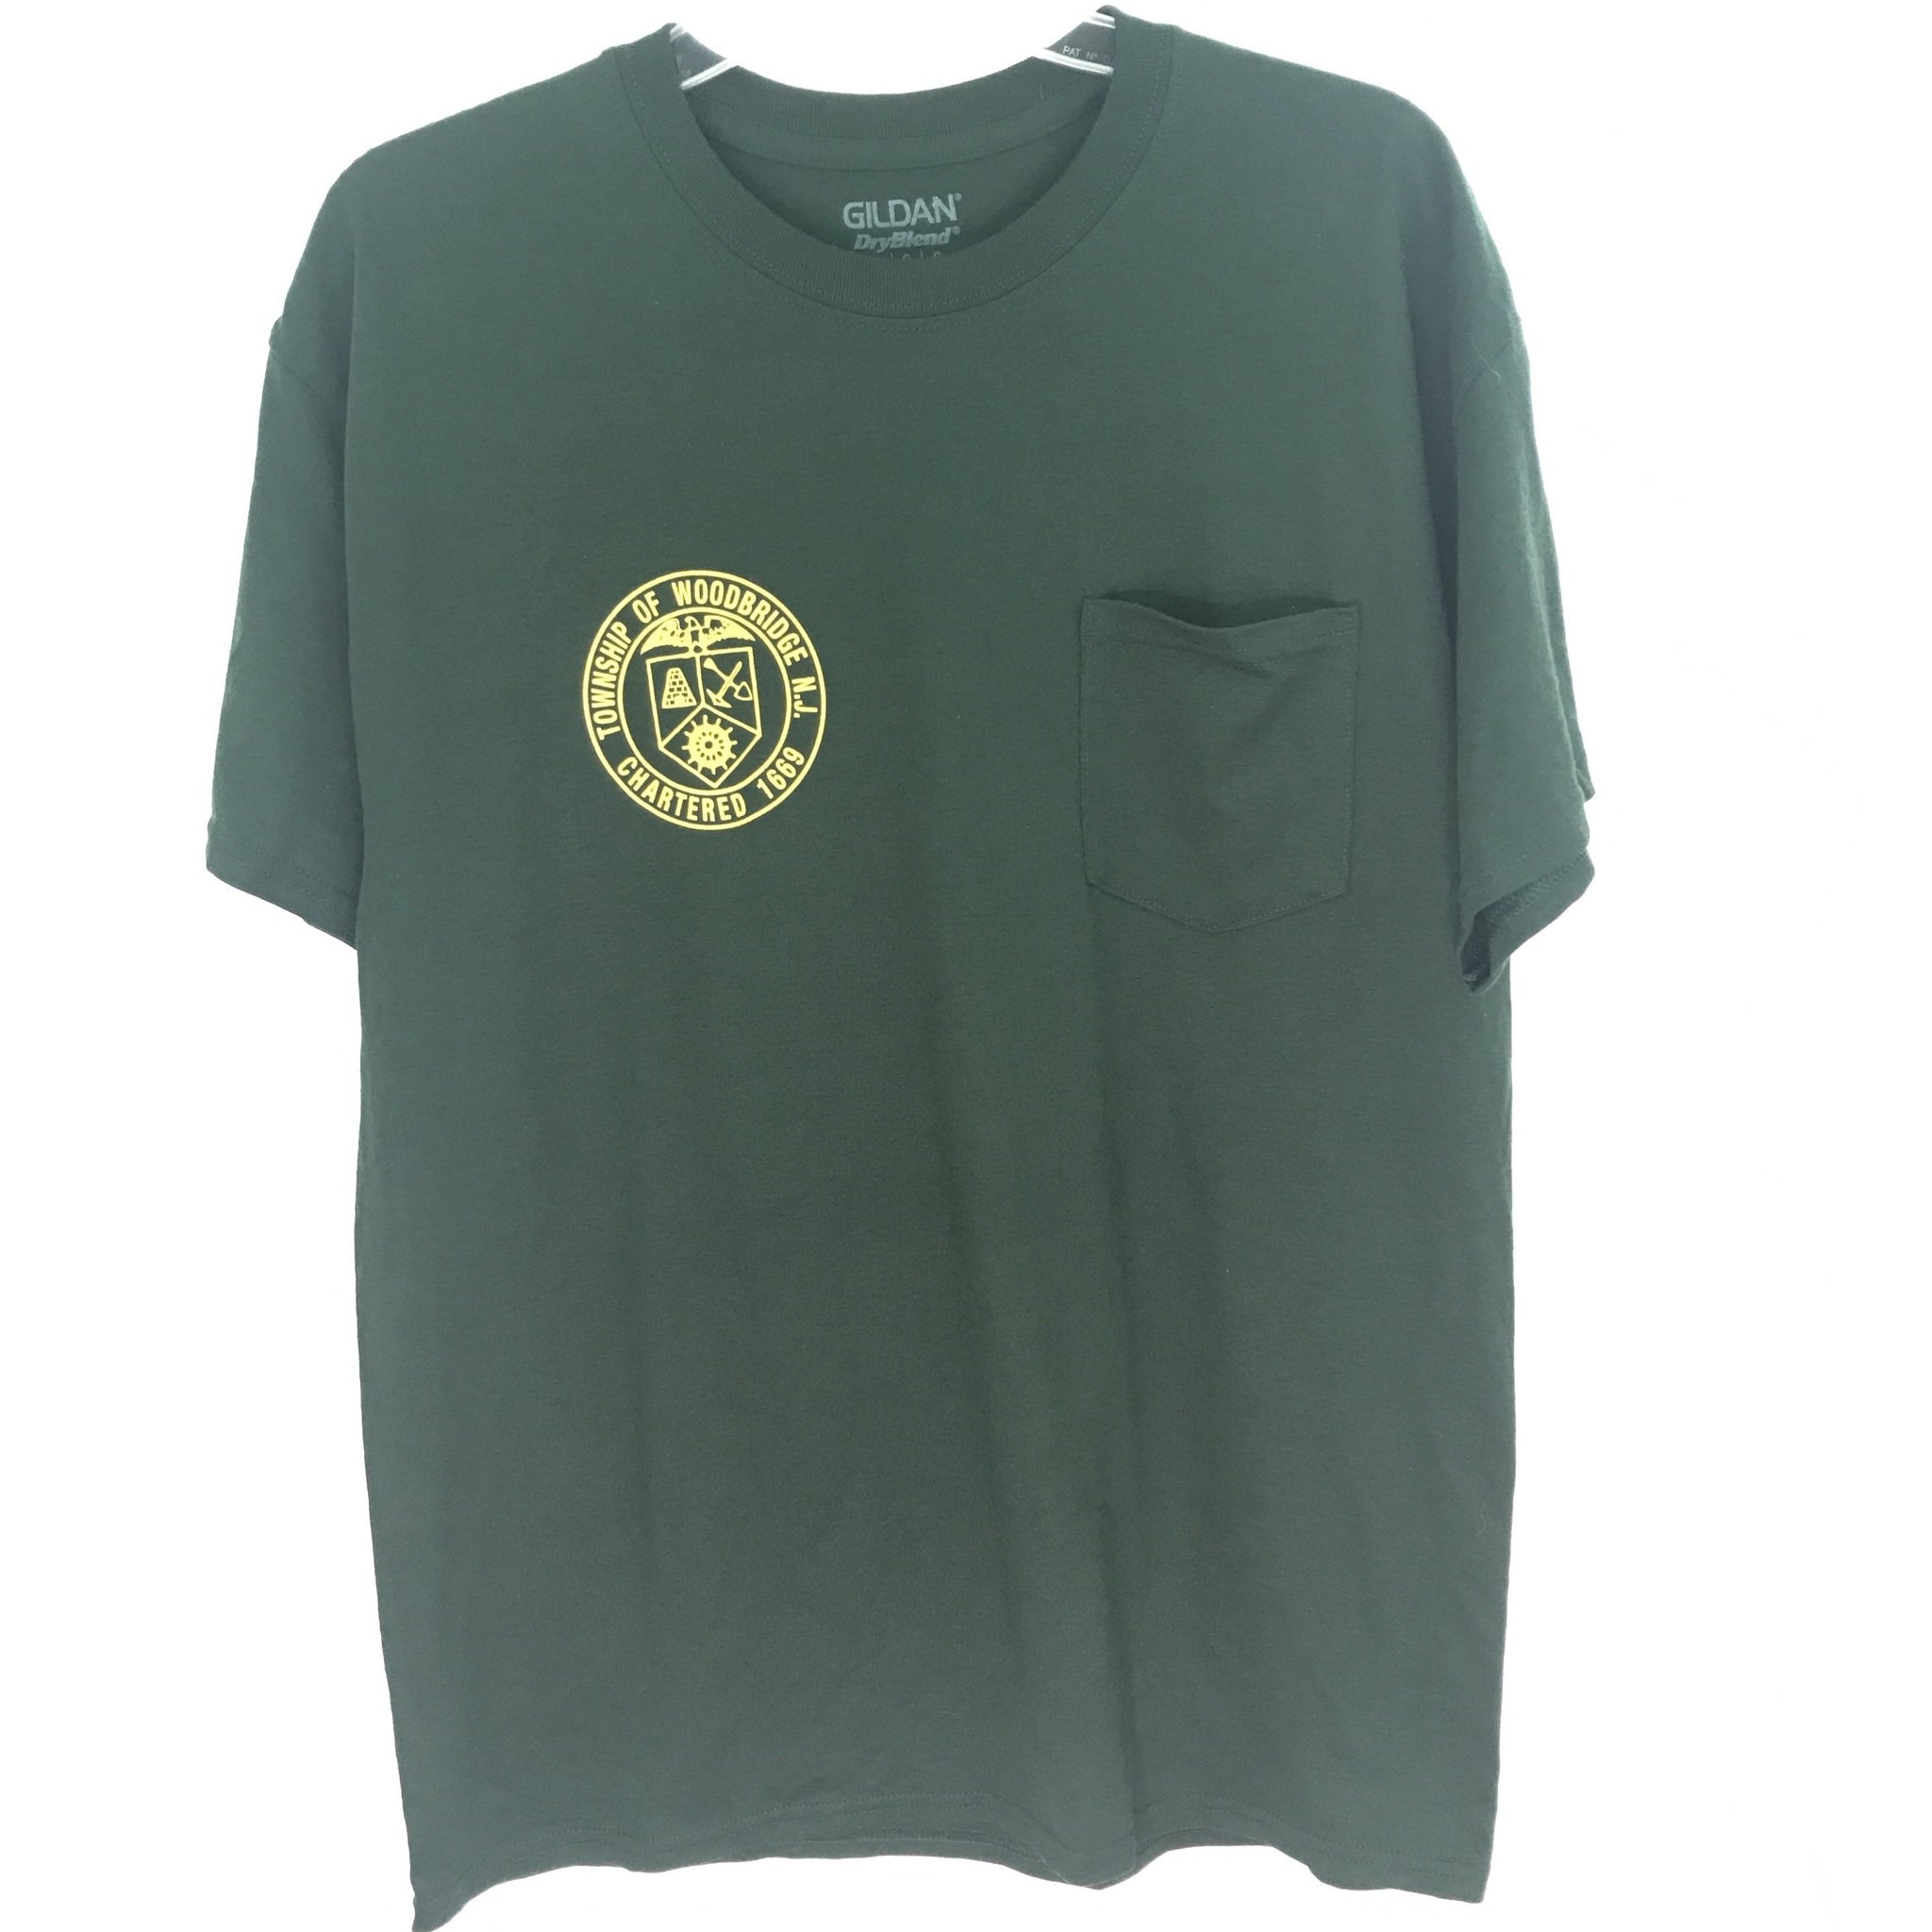 Woodbridge, N.J. Mens Pocket T Shirt - Hunter Green - Size Large - Gildan DriBlend